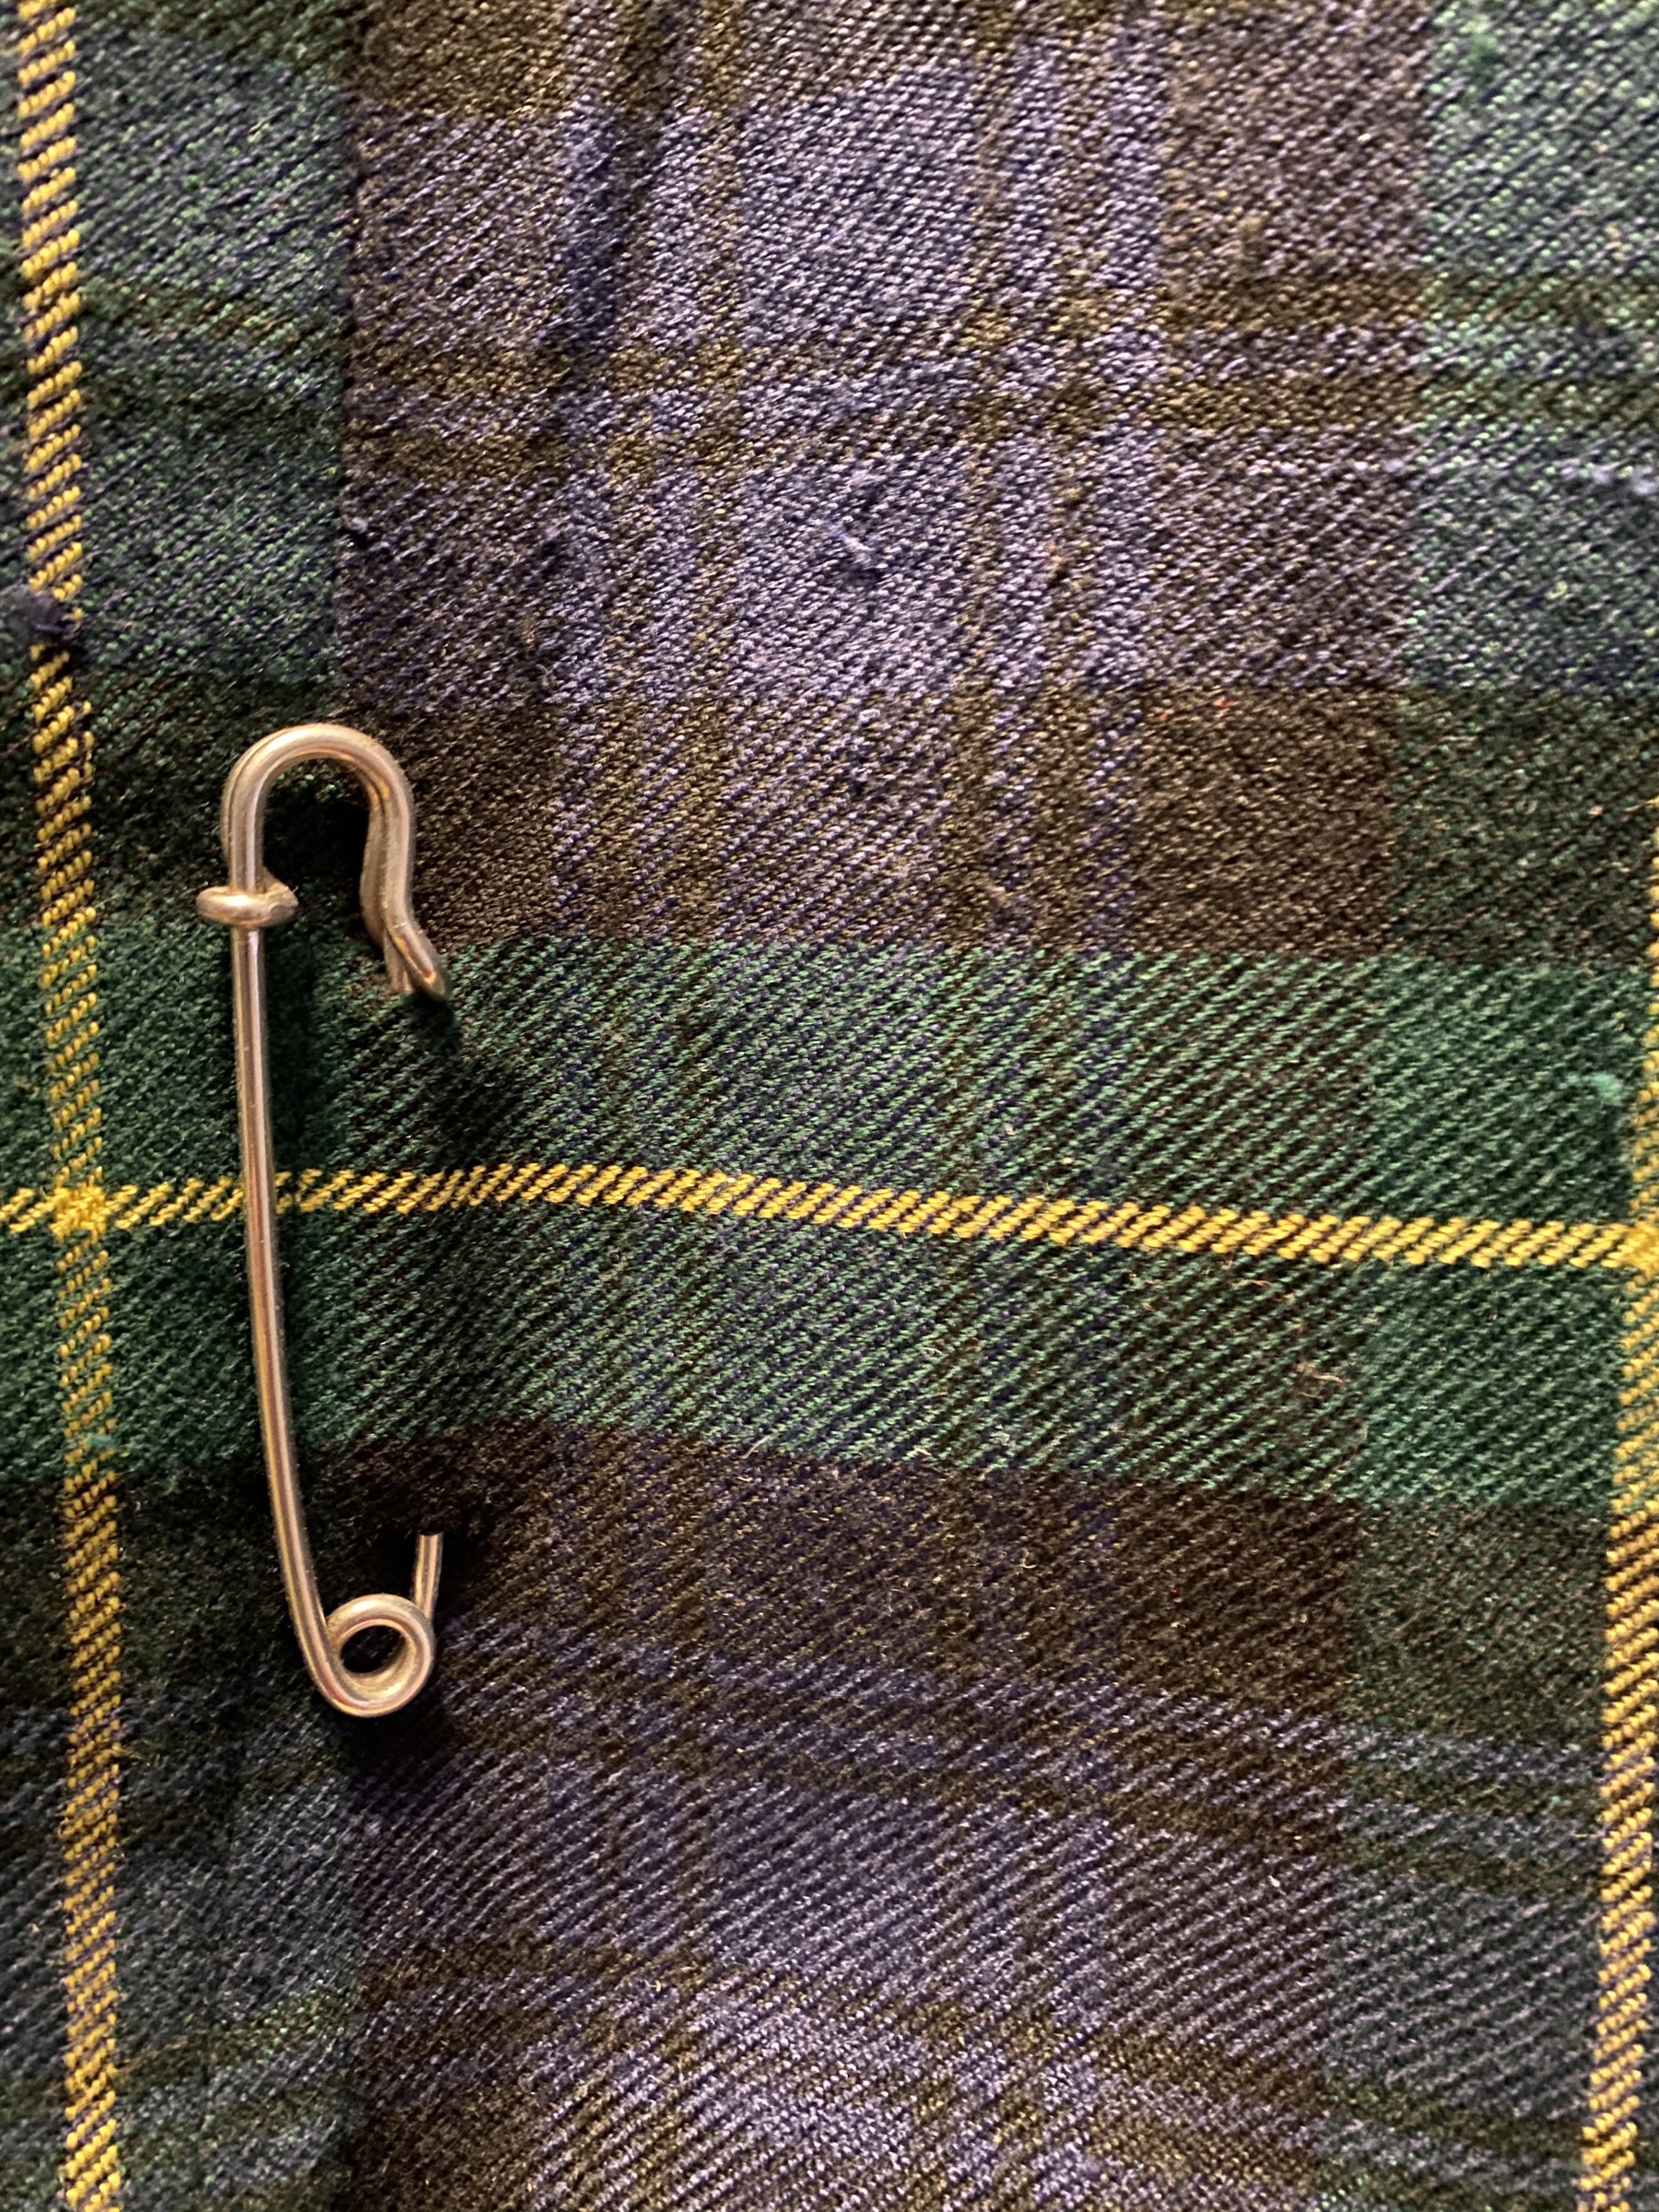 Close up of a kilt pin attached to a bit of tartan cloth.